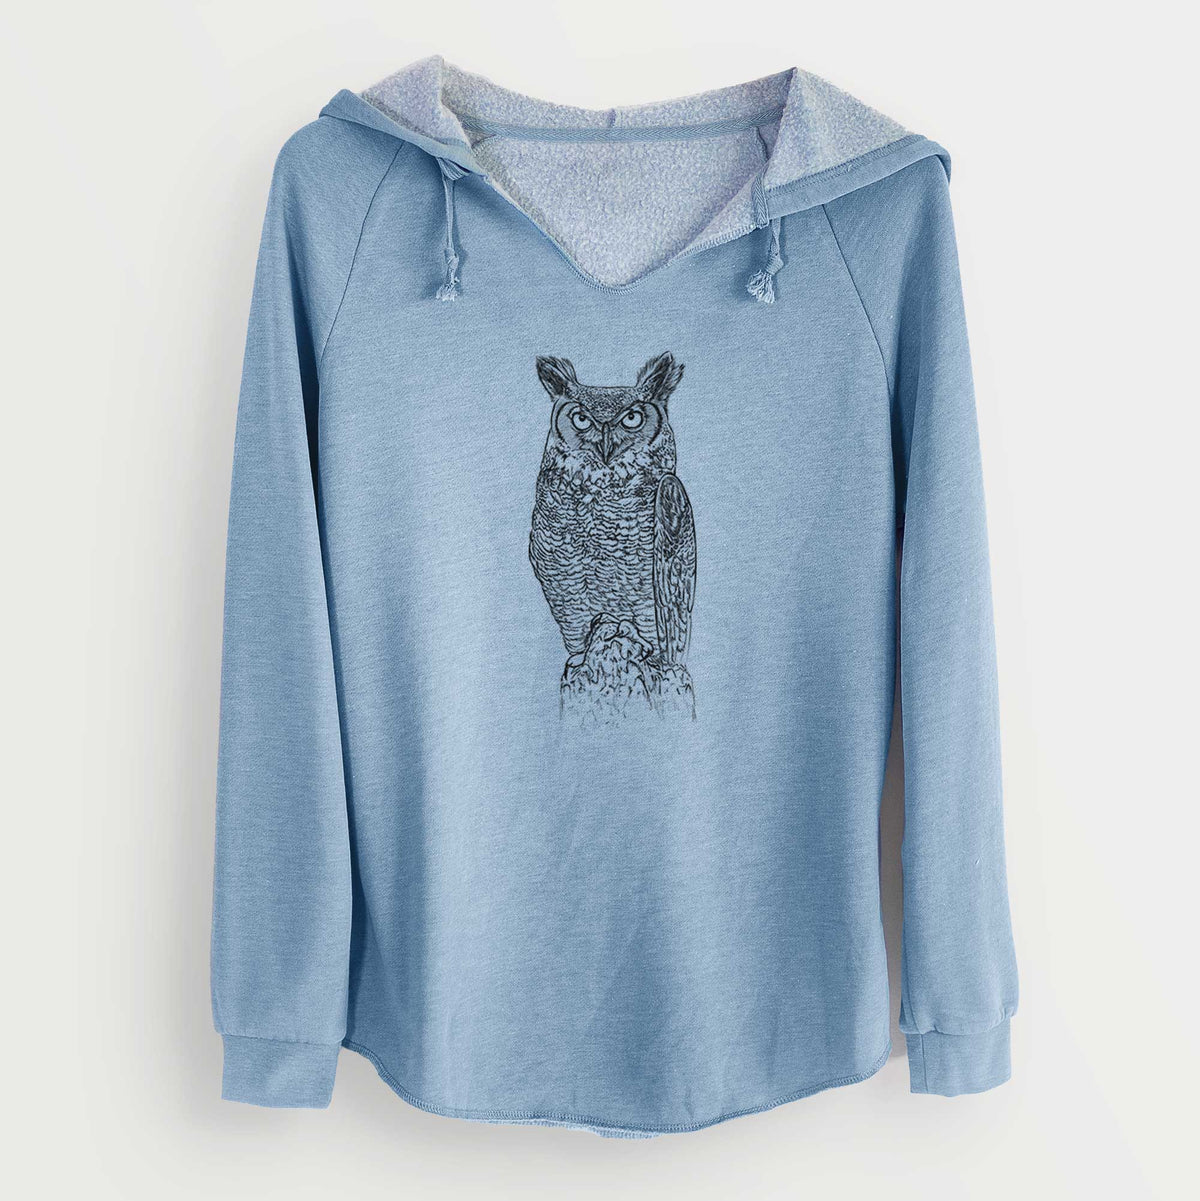 Bubo virginianus - Great Horned Owl - Cali Wave Hooded Sweatshirt